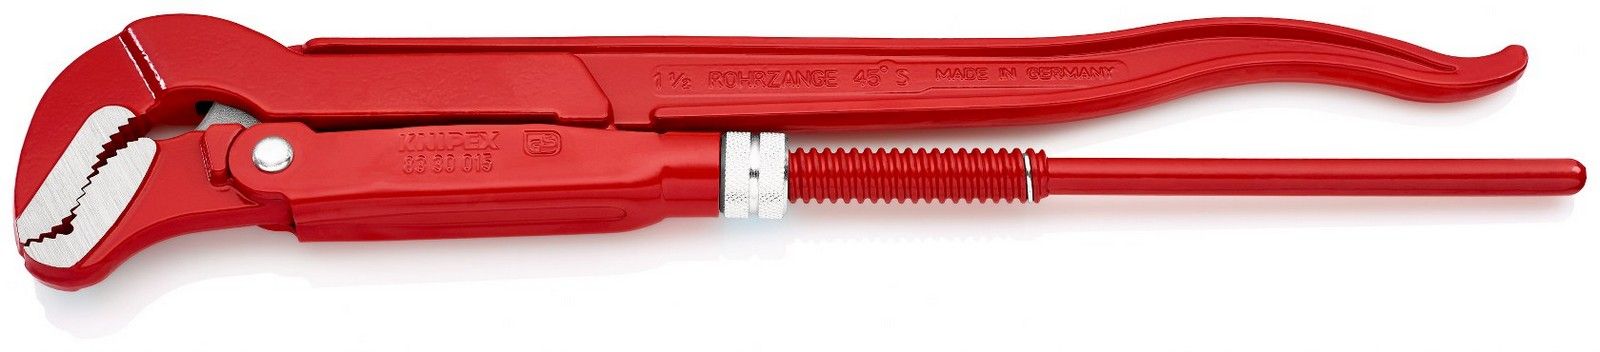 Knipex vodoinstalaterska klešta za cevi - S tip 1 1/2" kosa (83 30 015)